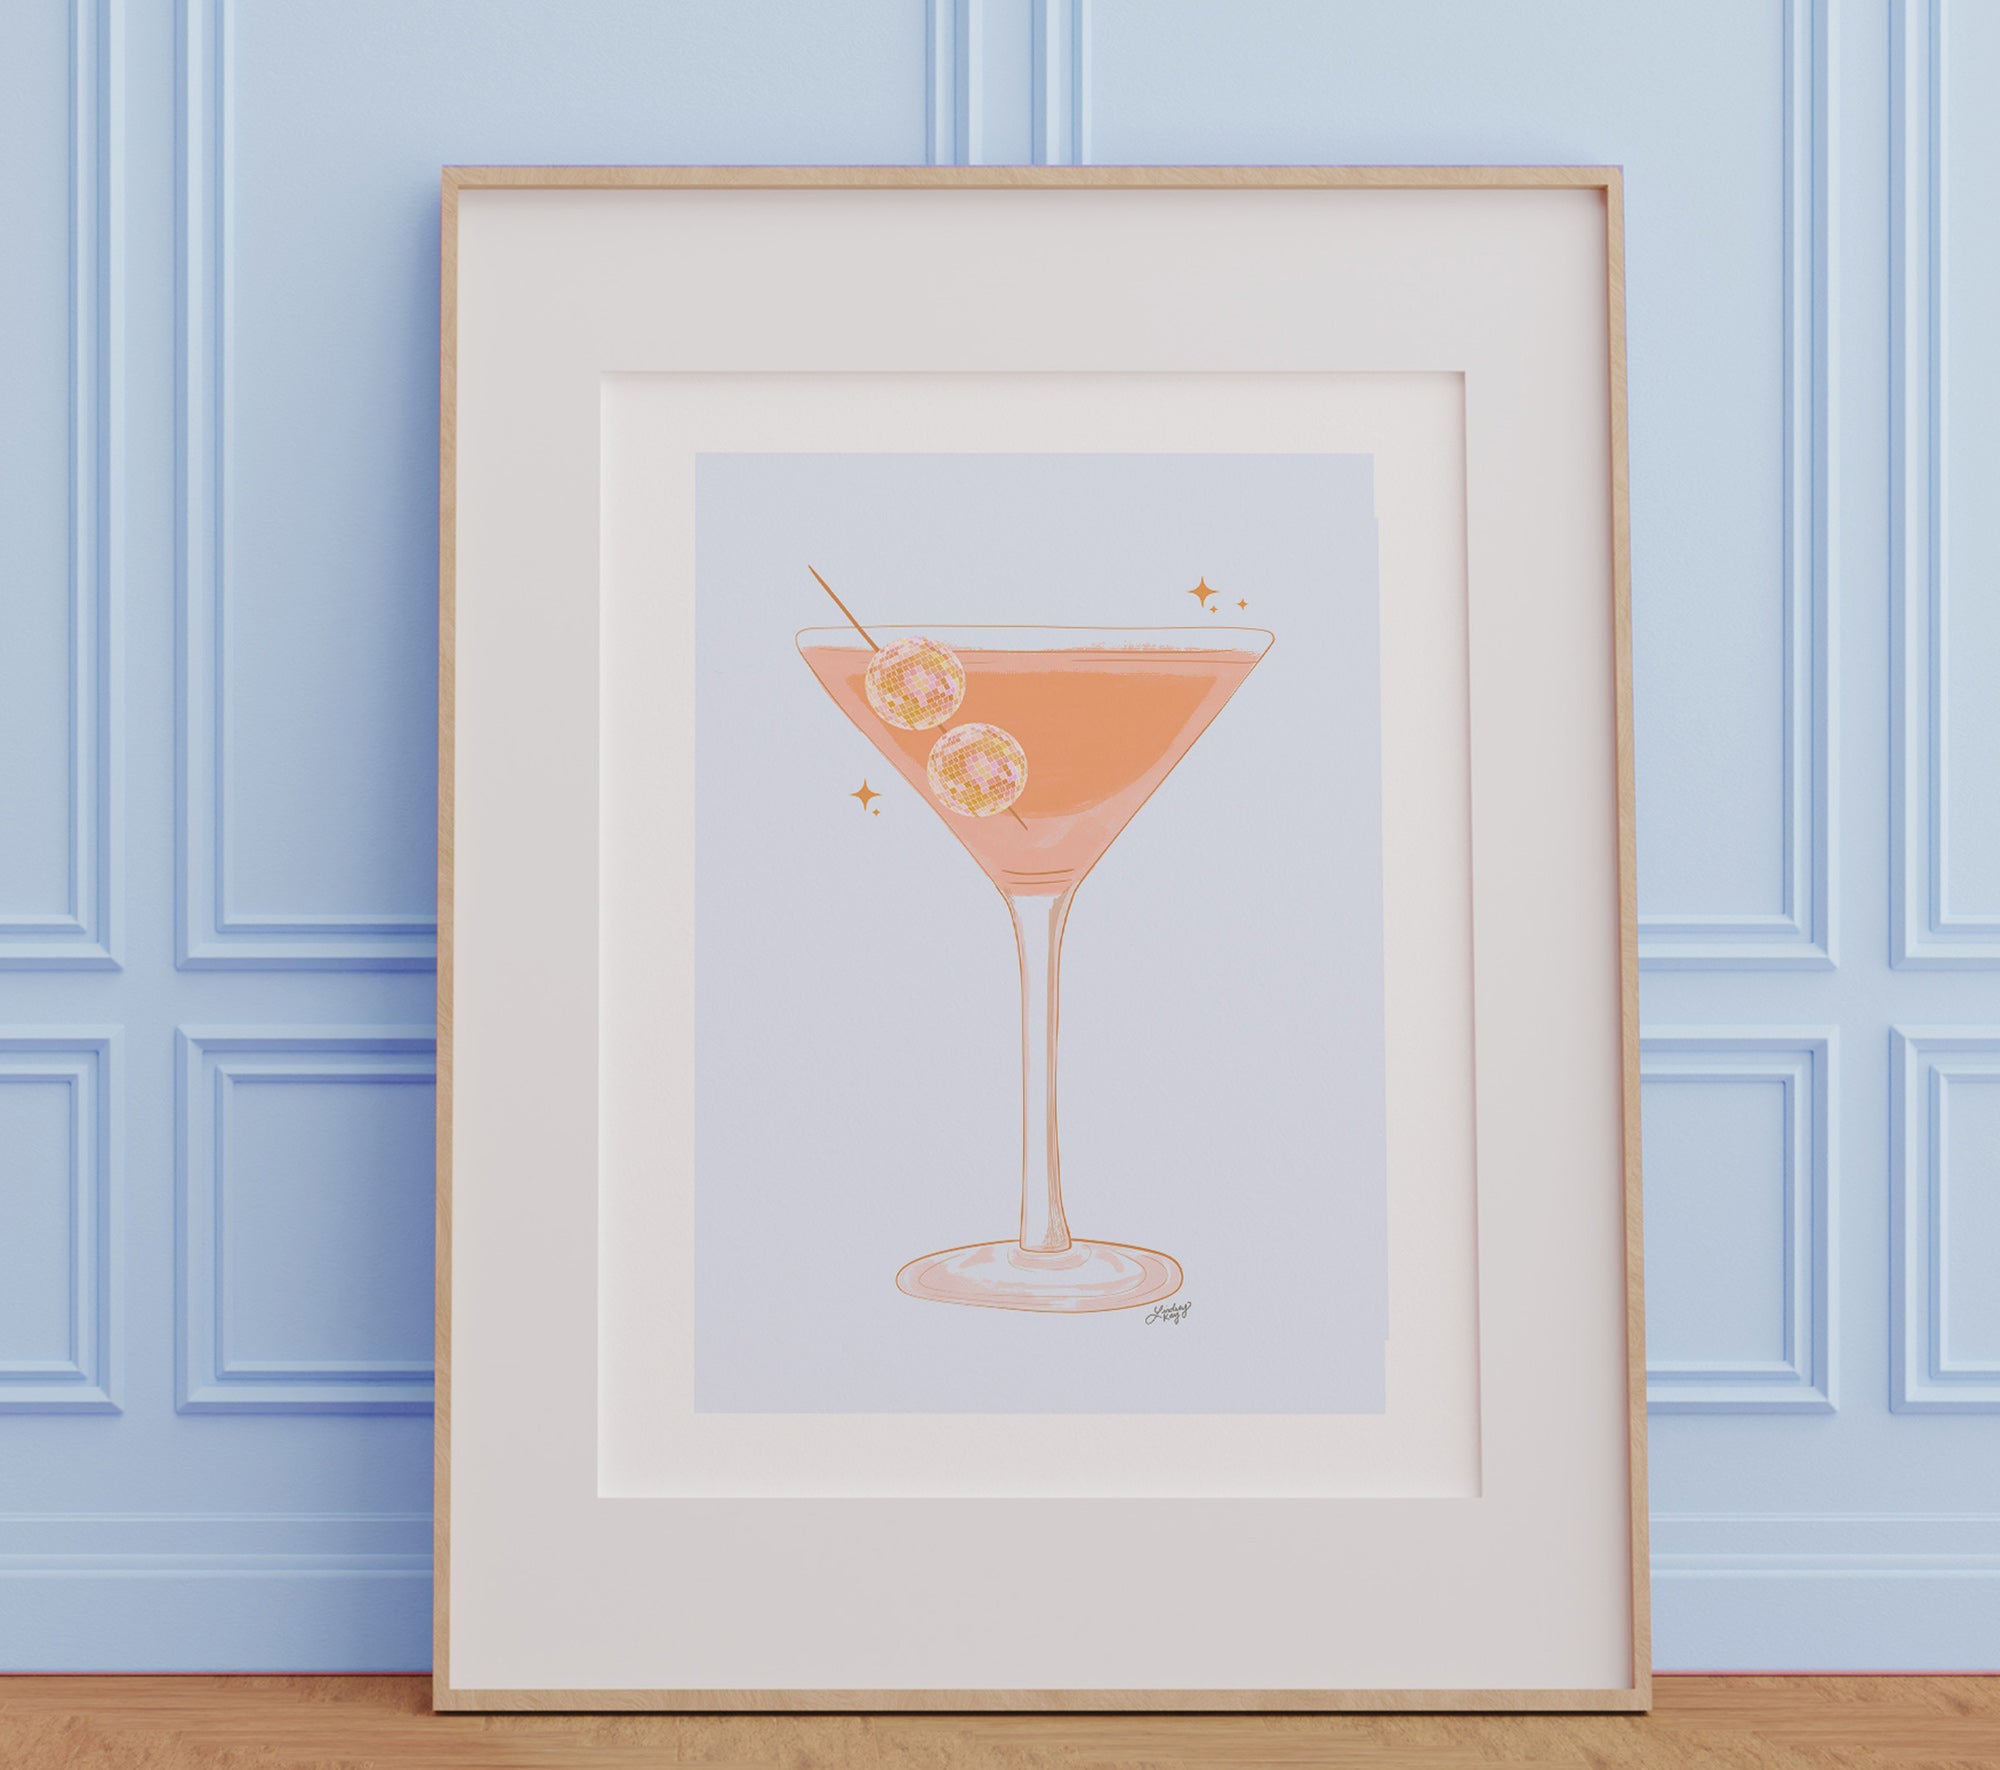 Disco Ball Martini Illustration (Orange/Yellow Palette) - Art Print